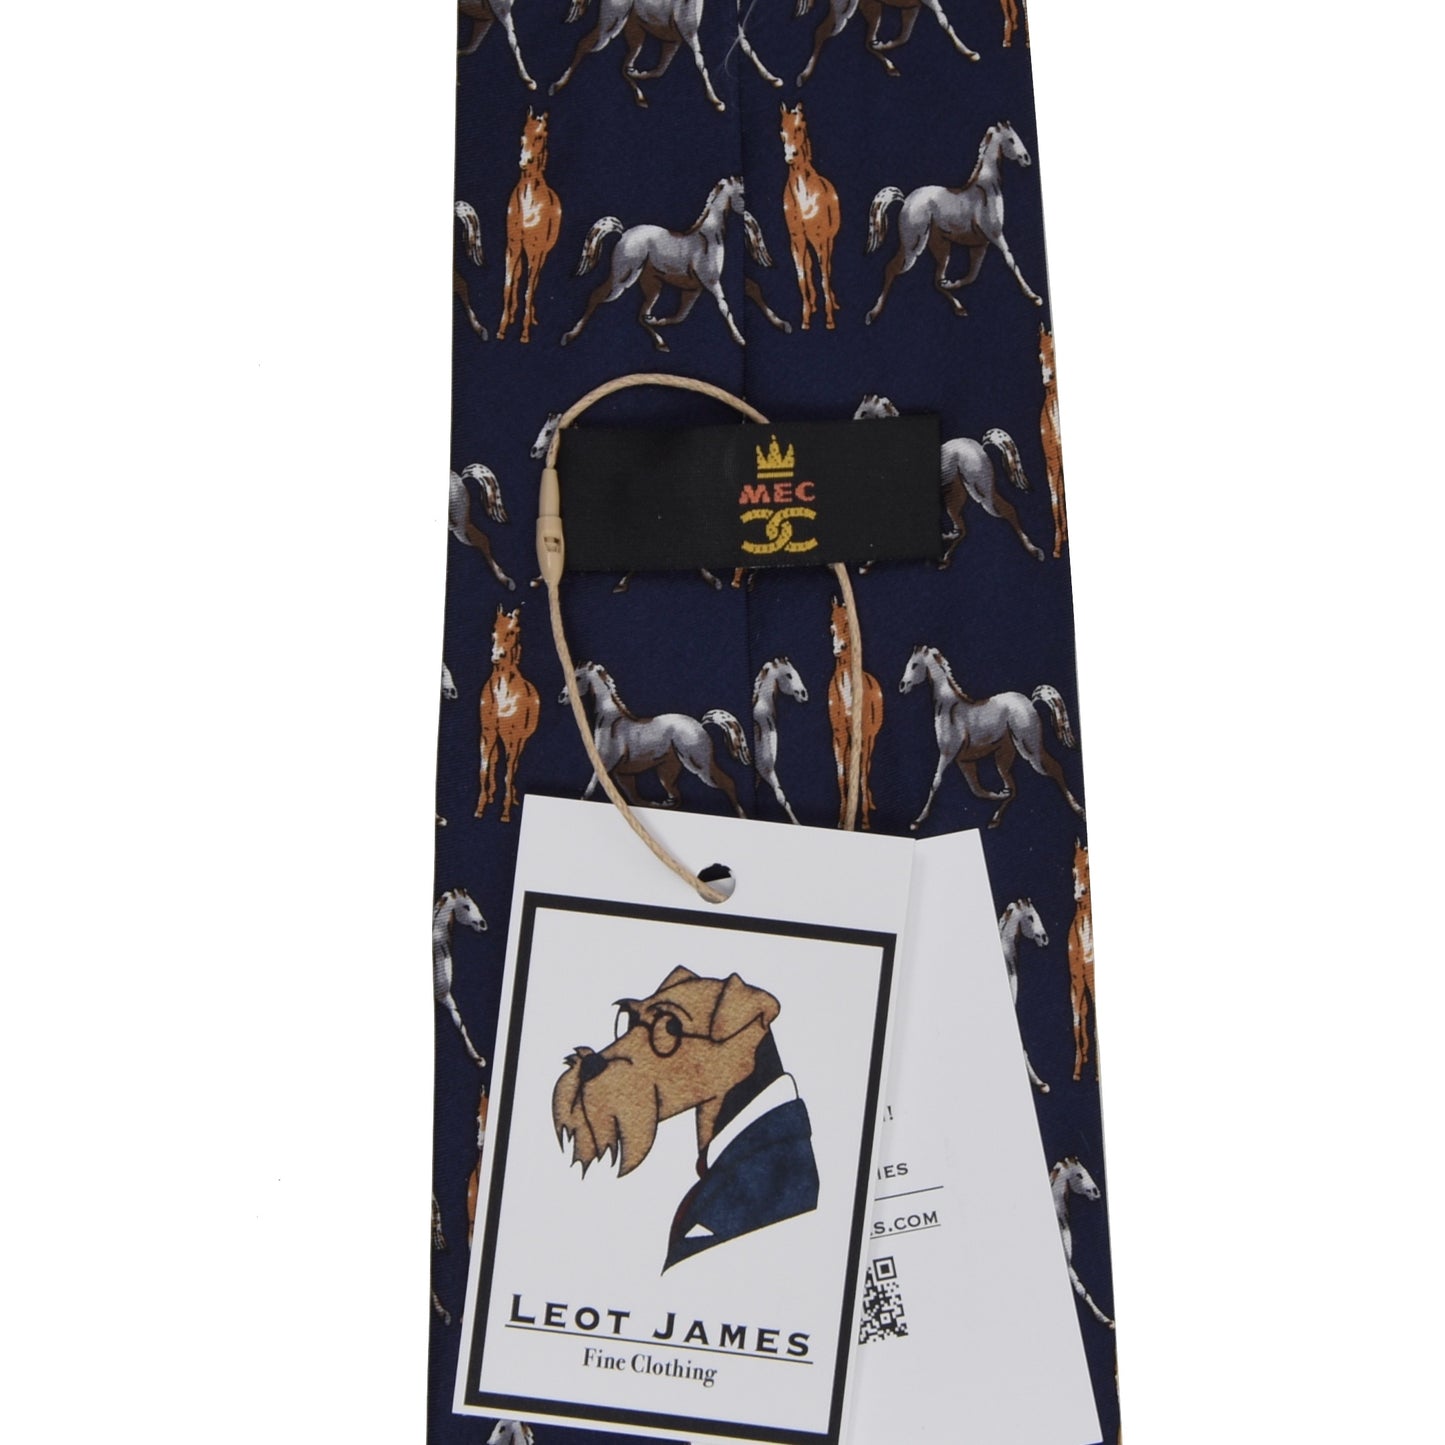 Horse Themed Printed Silk Tie - Navy